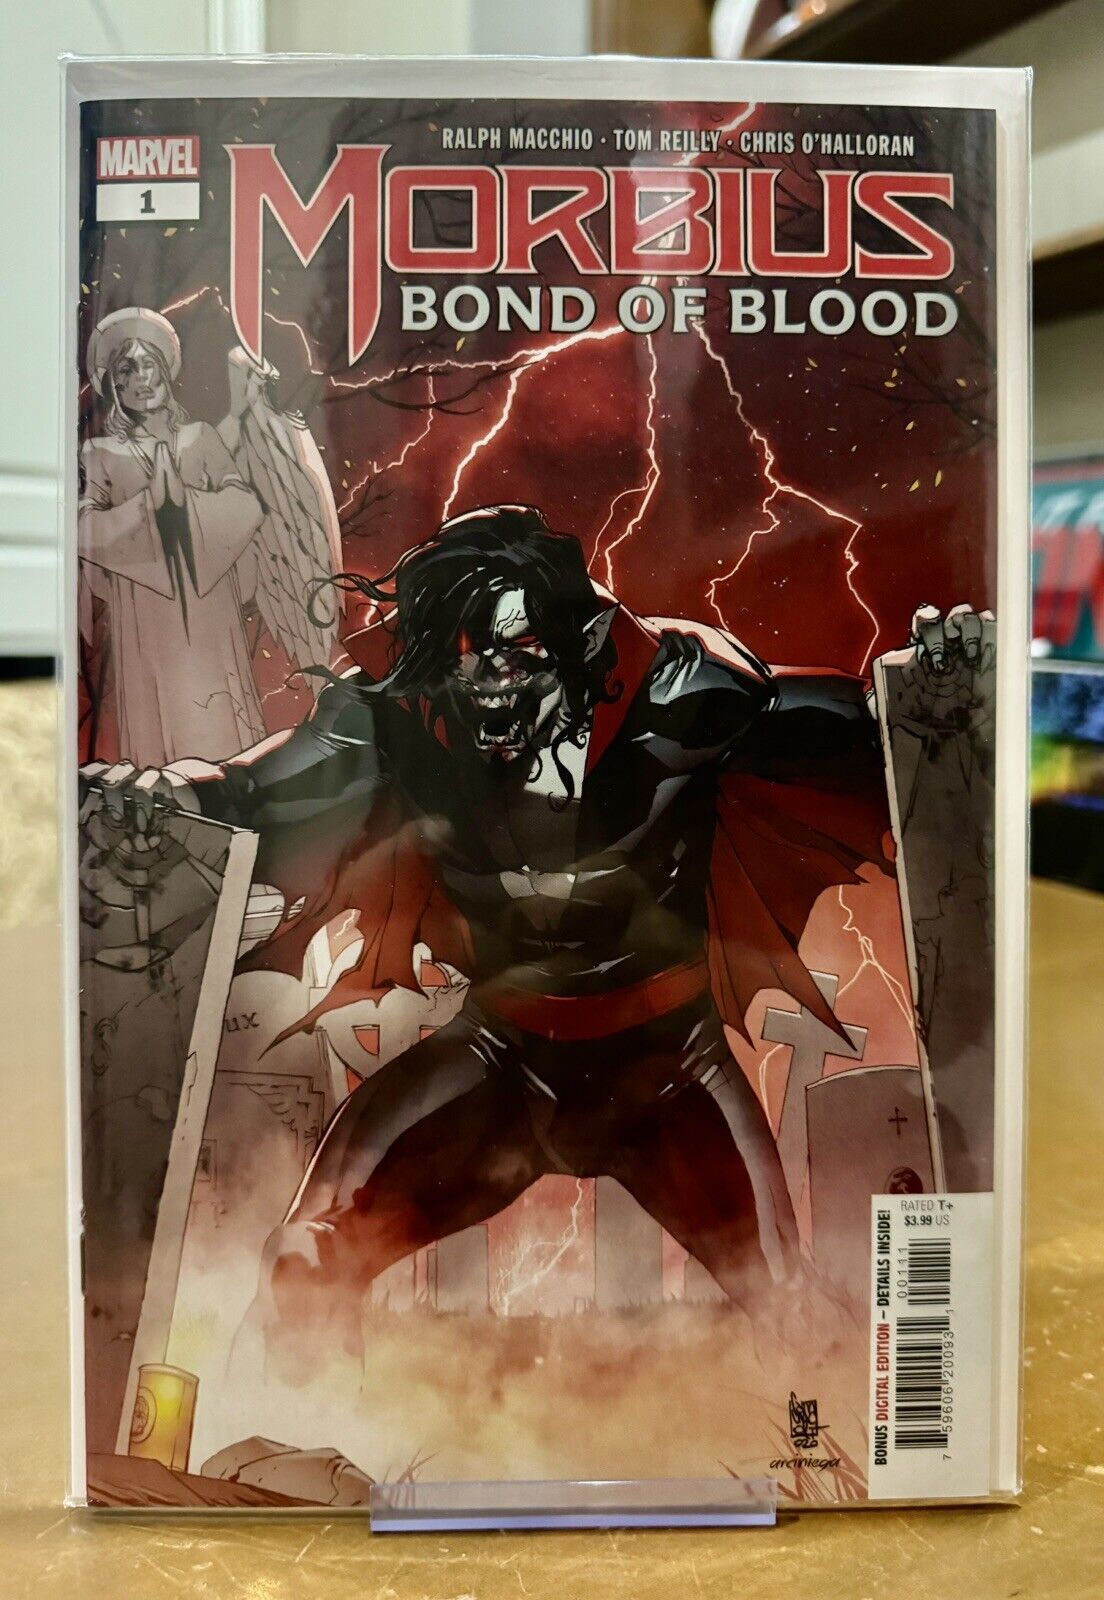 Morbius: Bond of Blood #1 (Marvel Comics) VF/NM